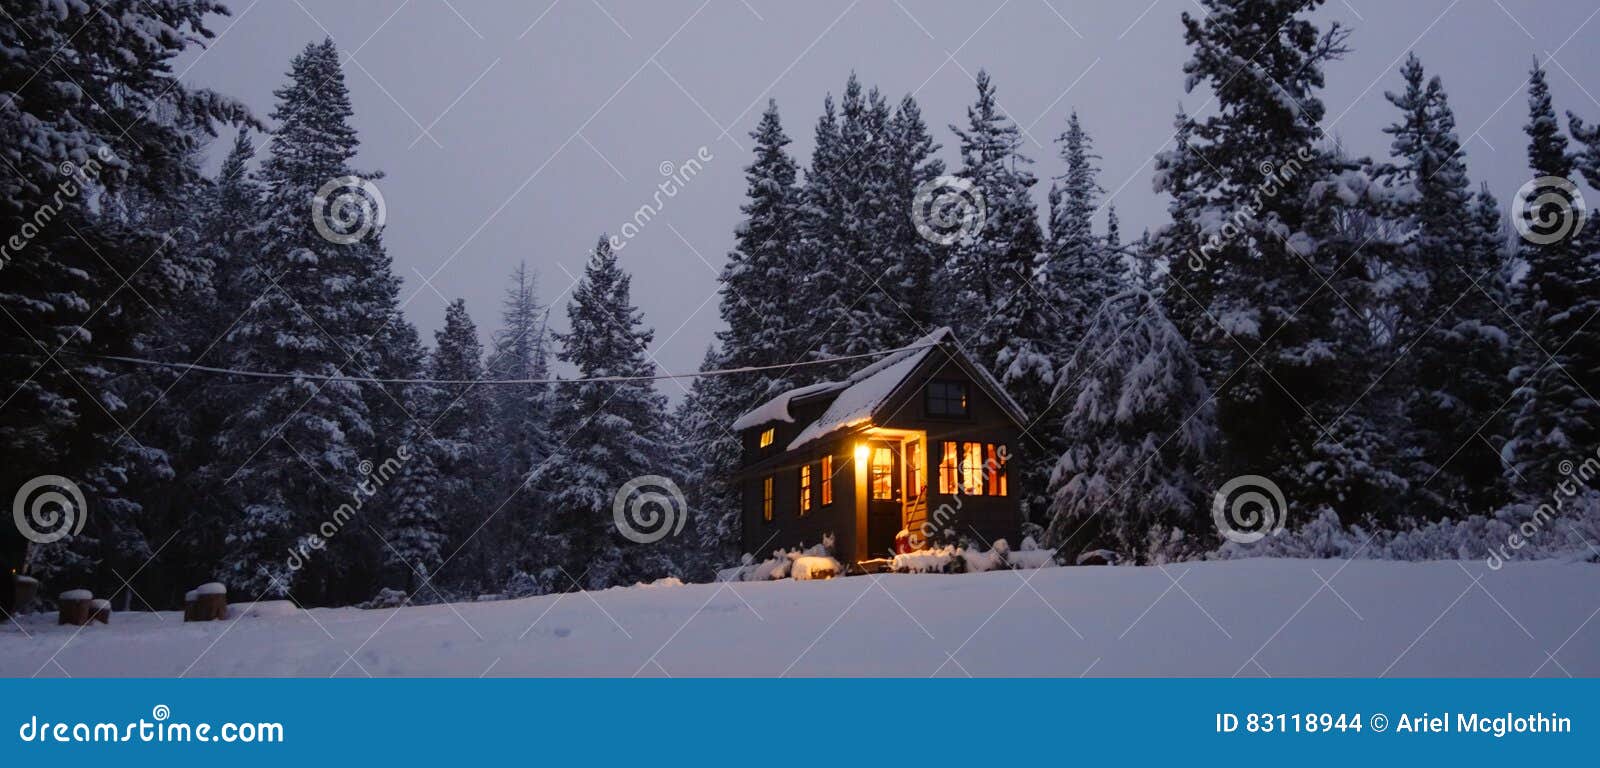 snowy tiny house